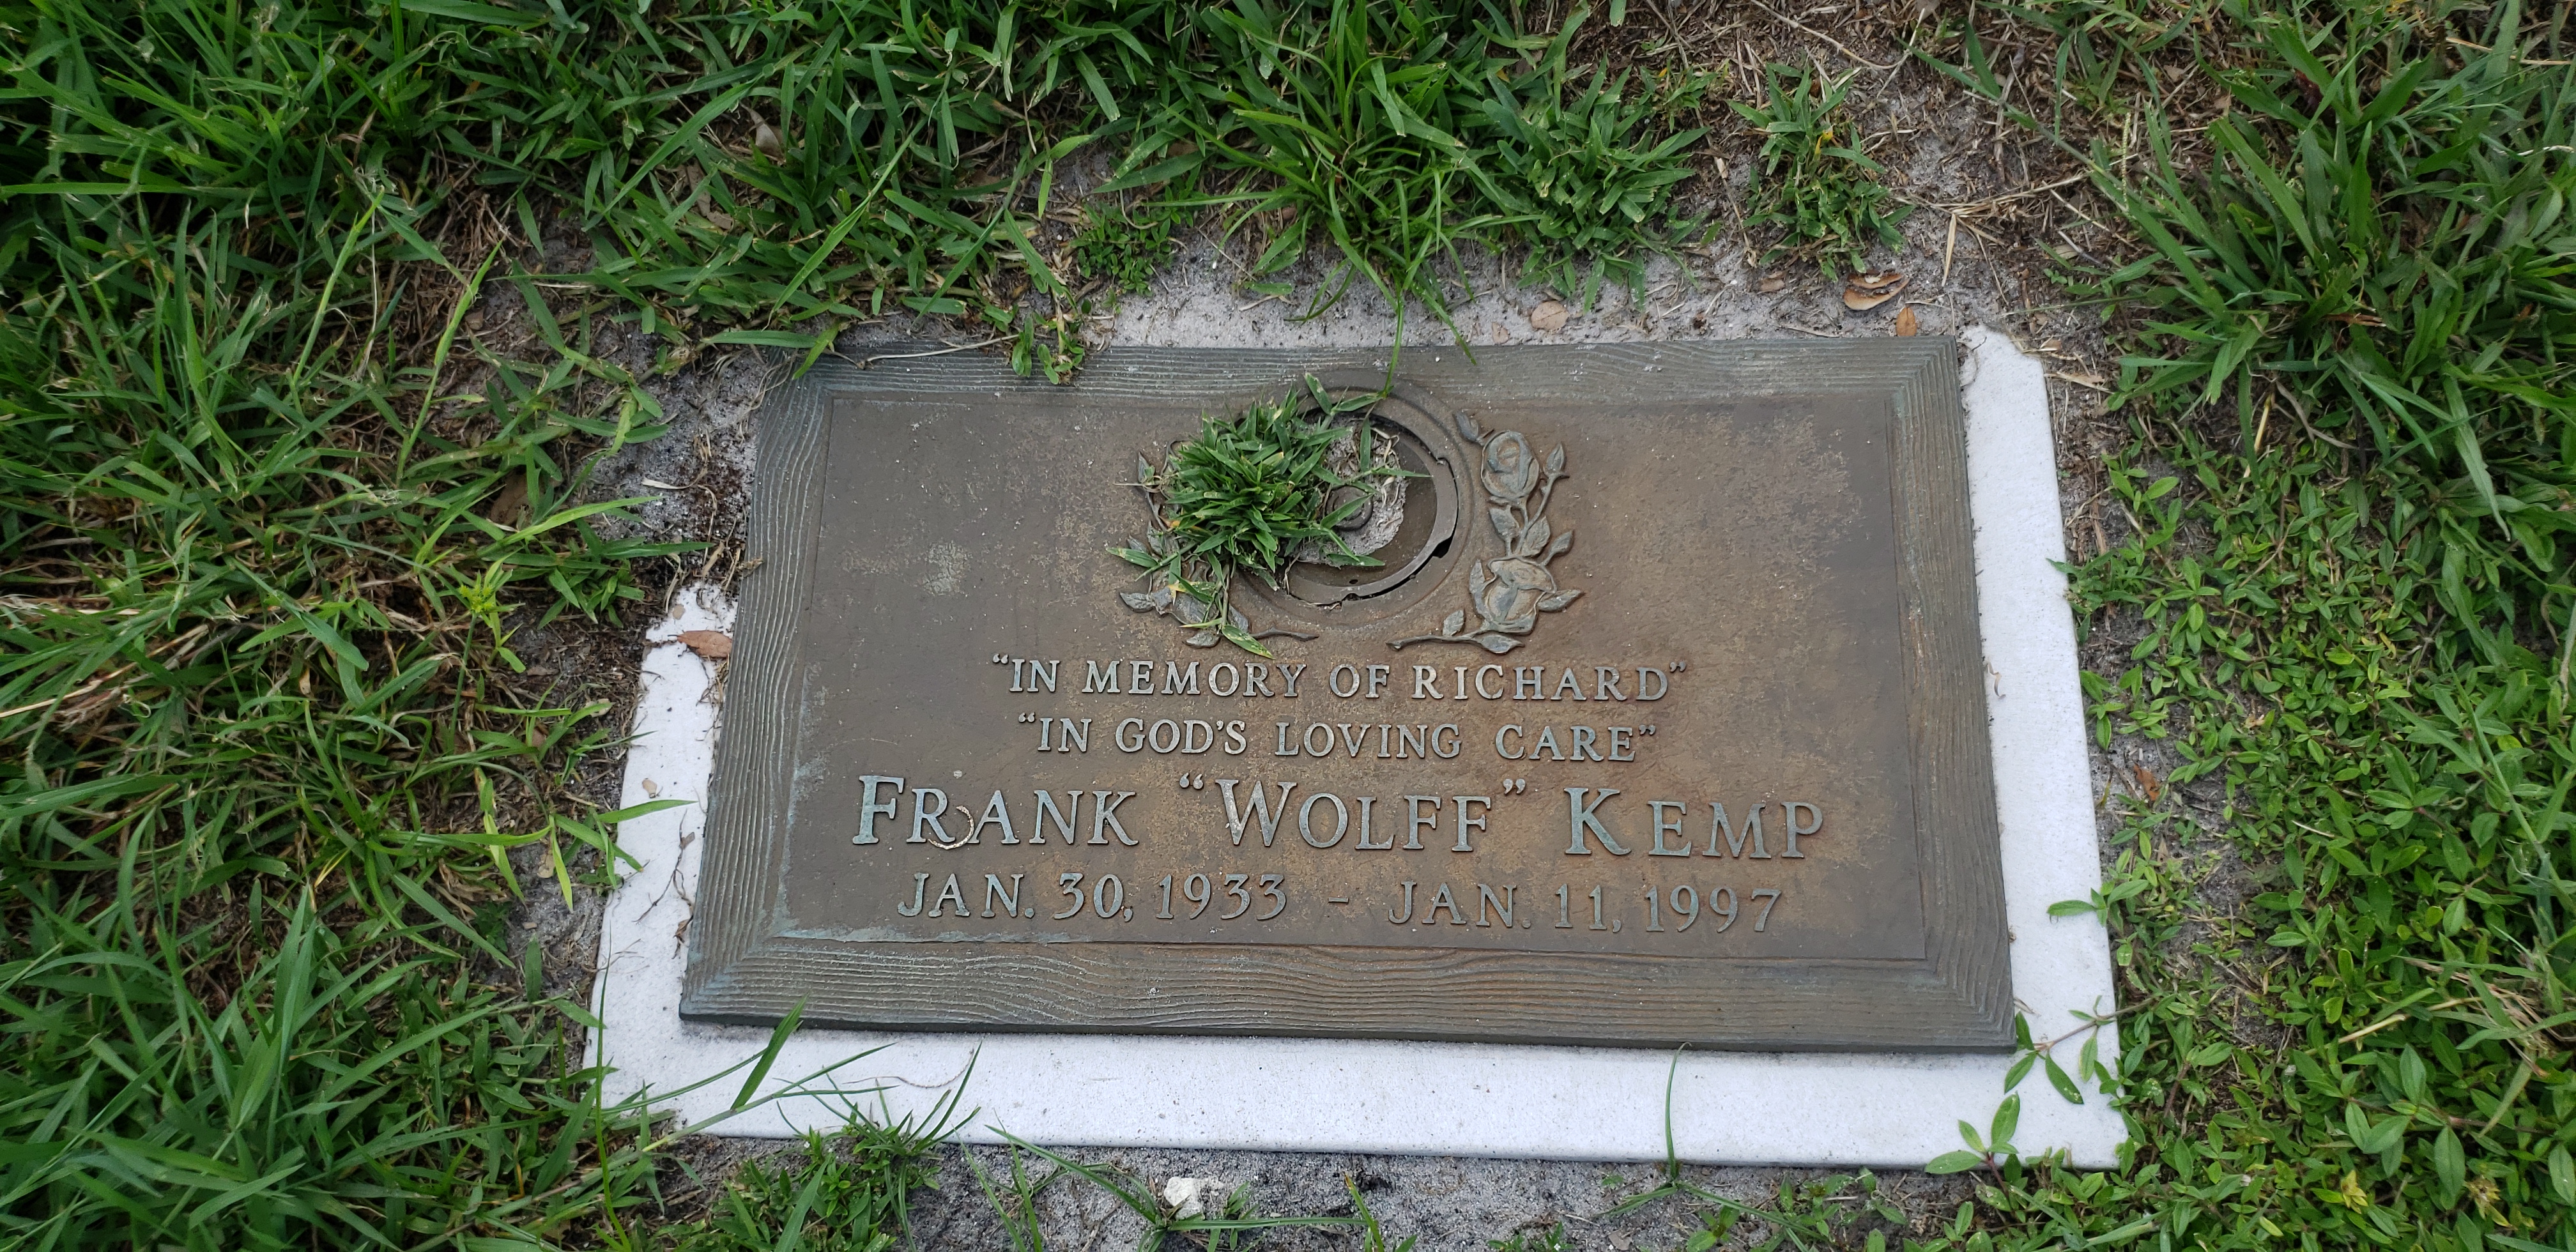 Frank "Wolff" Kemp